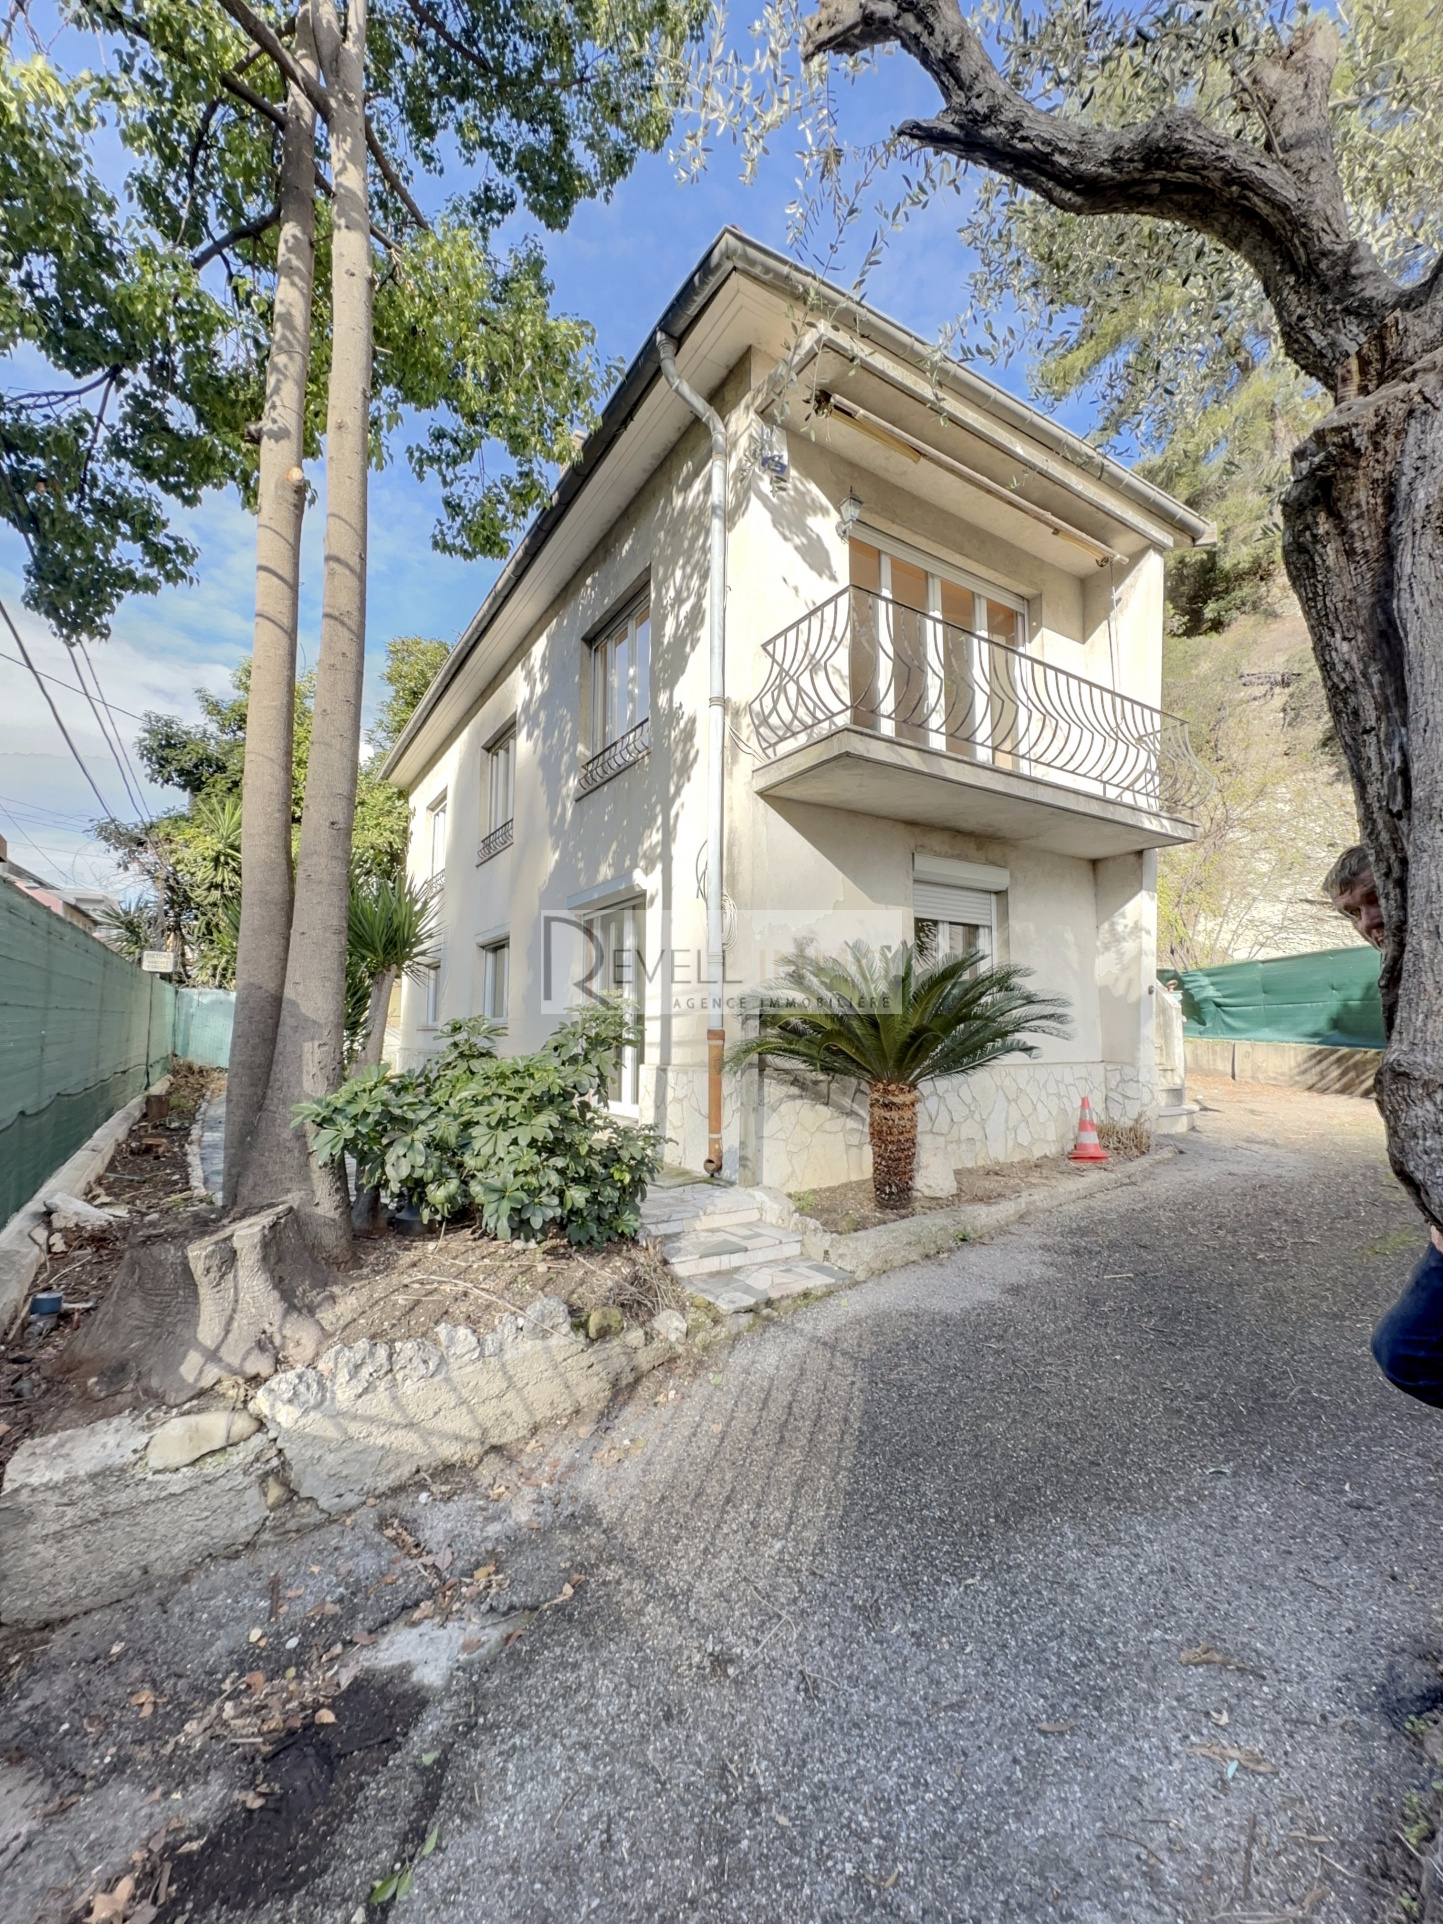 Vente Maison 148m² 5 Pièces à Nice (06000) - Revell'Immo